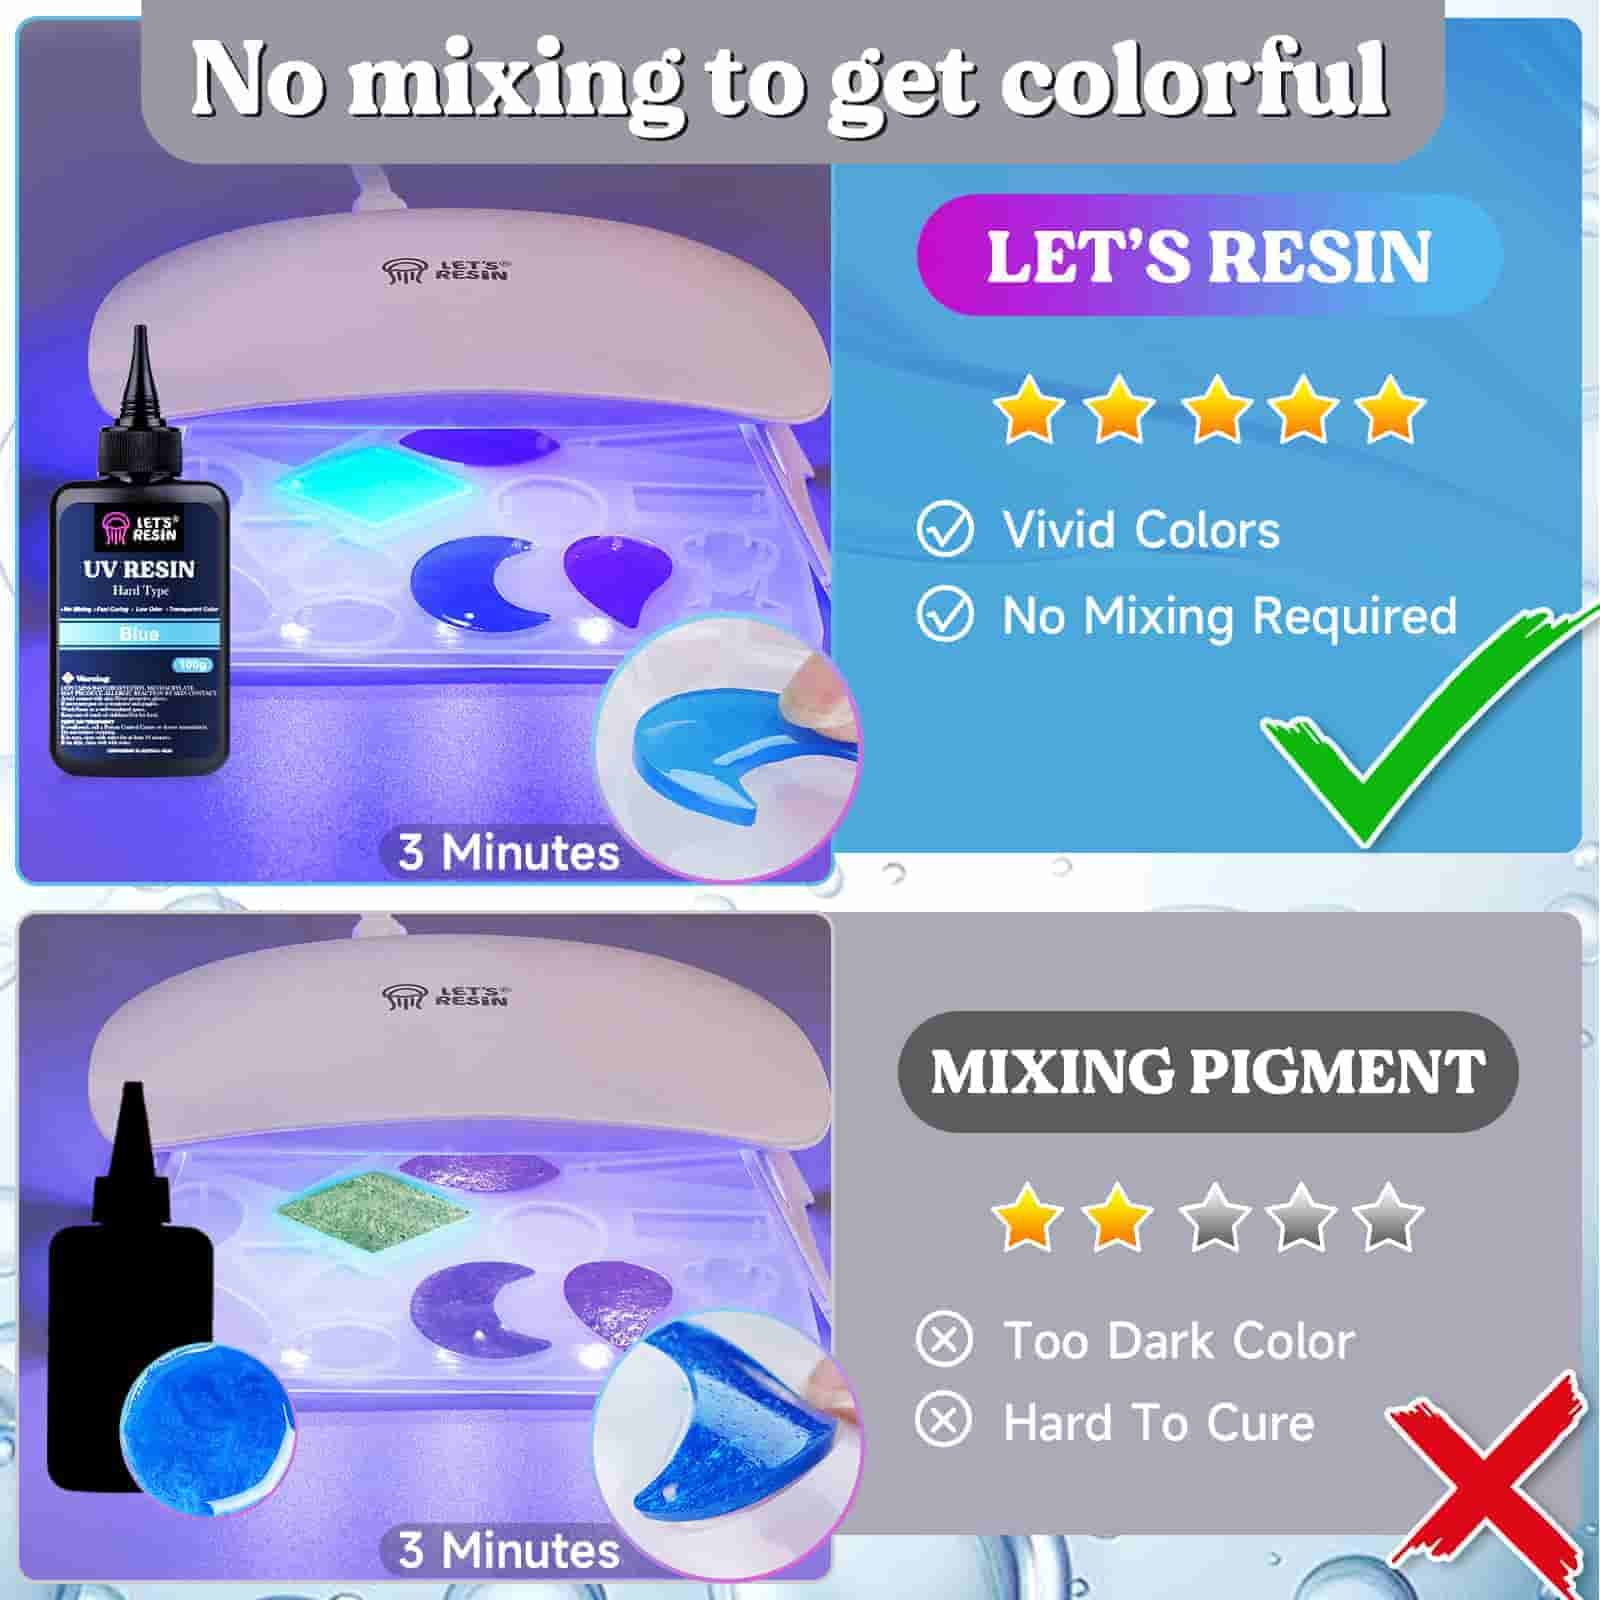 Let's Resin Blue UV Epoxy Resin - 100g